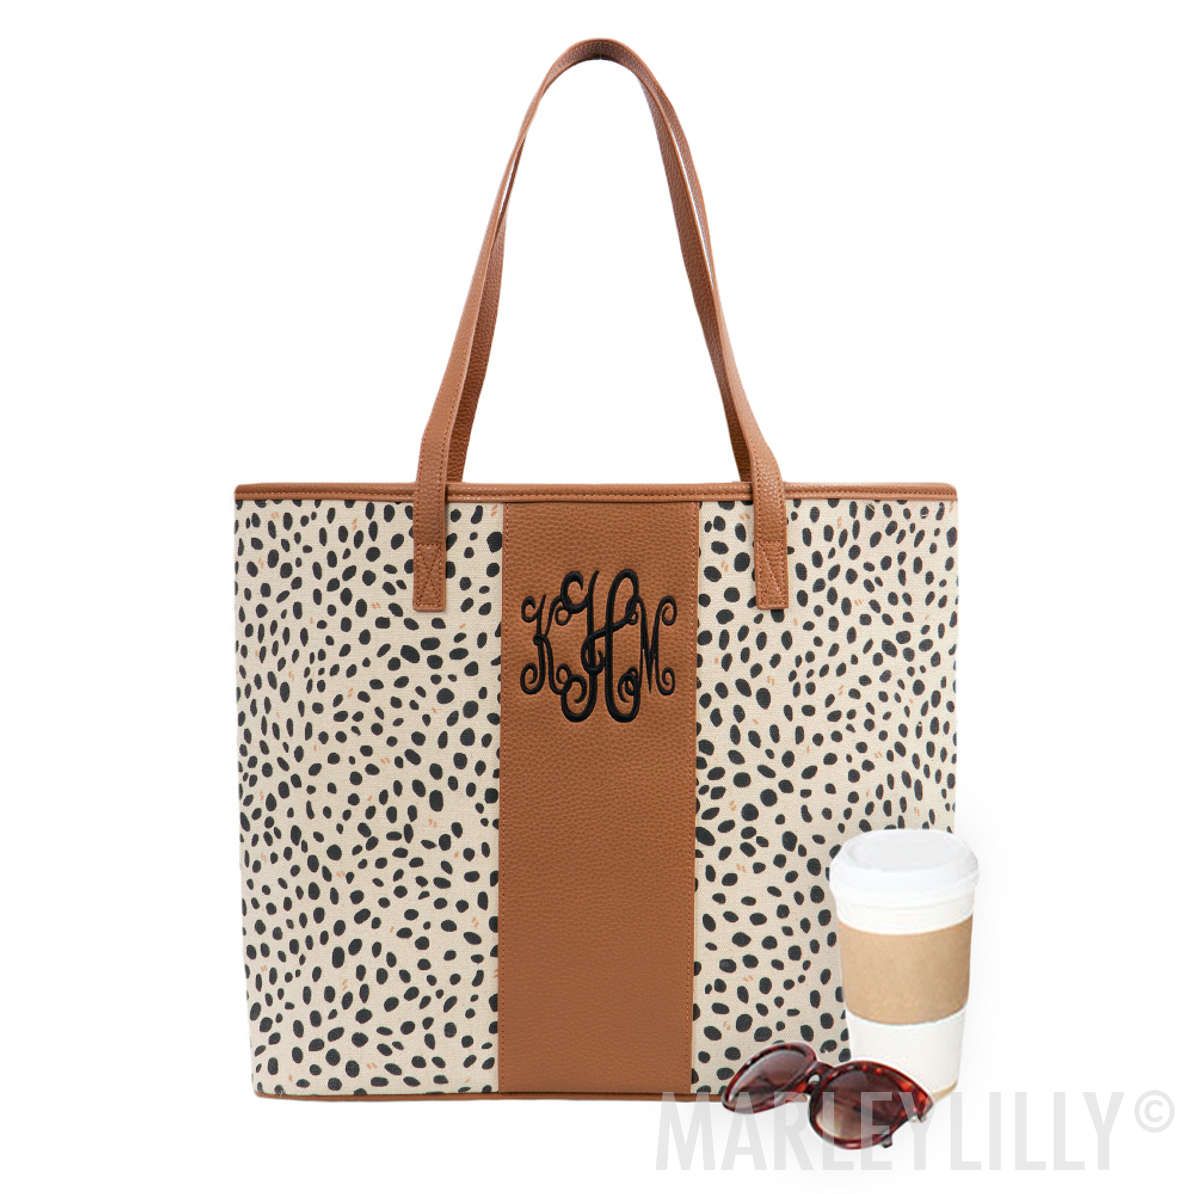 Monogrammed Leopard Tote Bag | Marleylilly